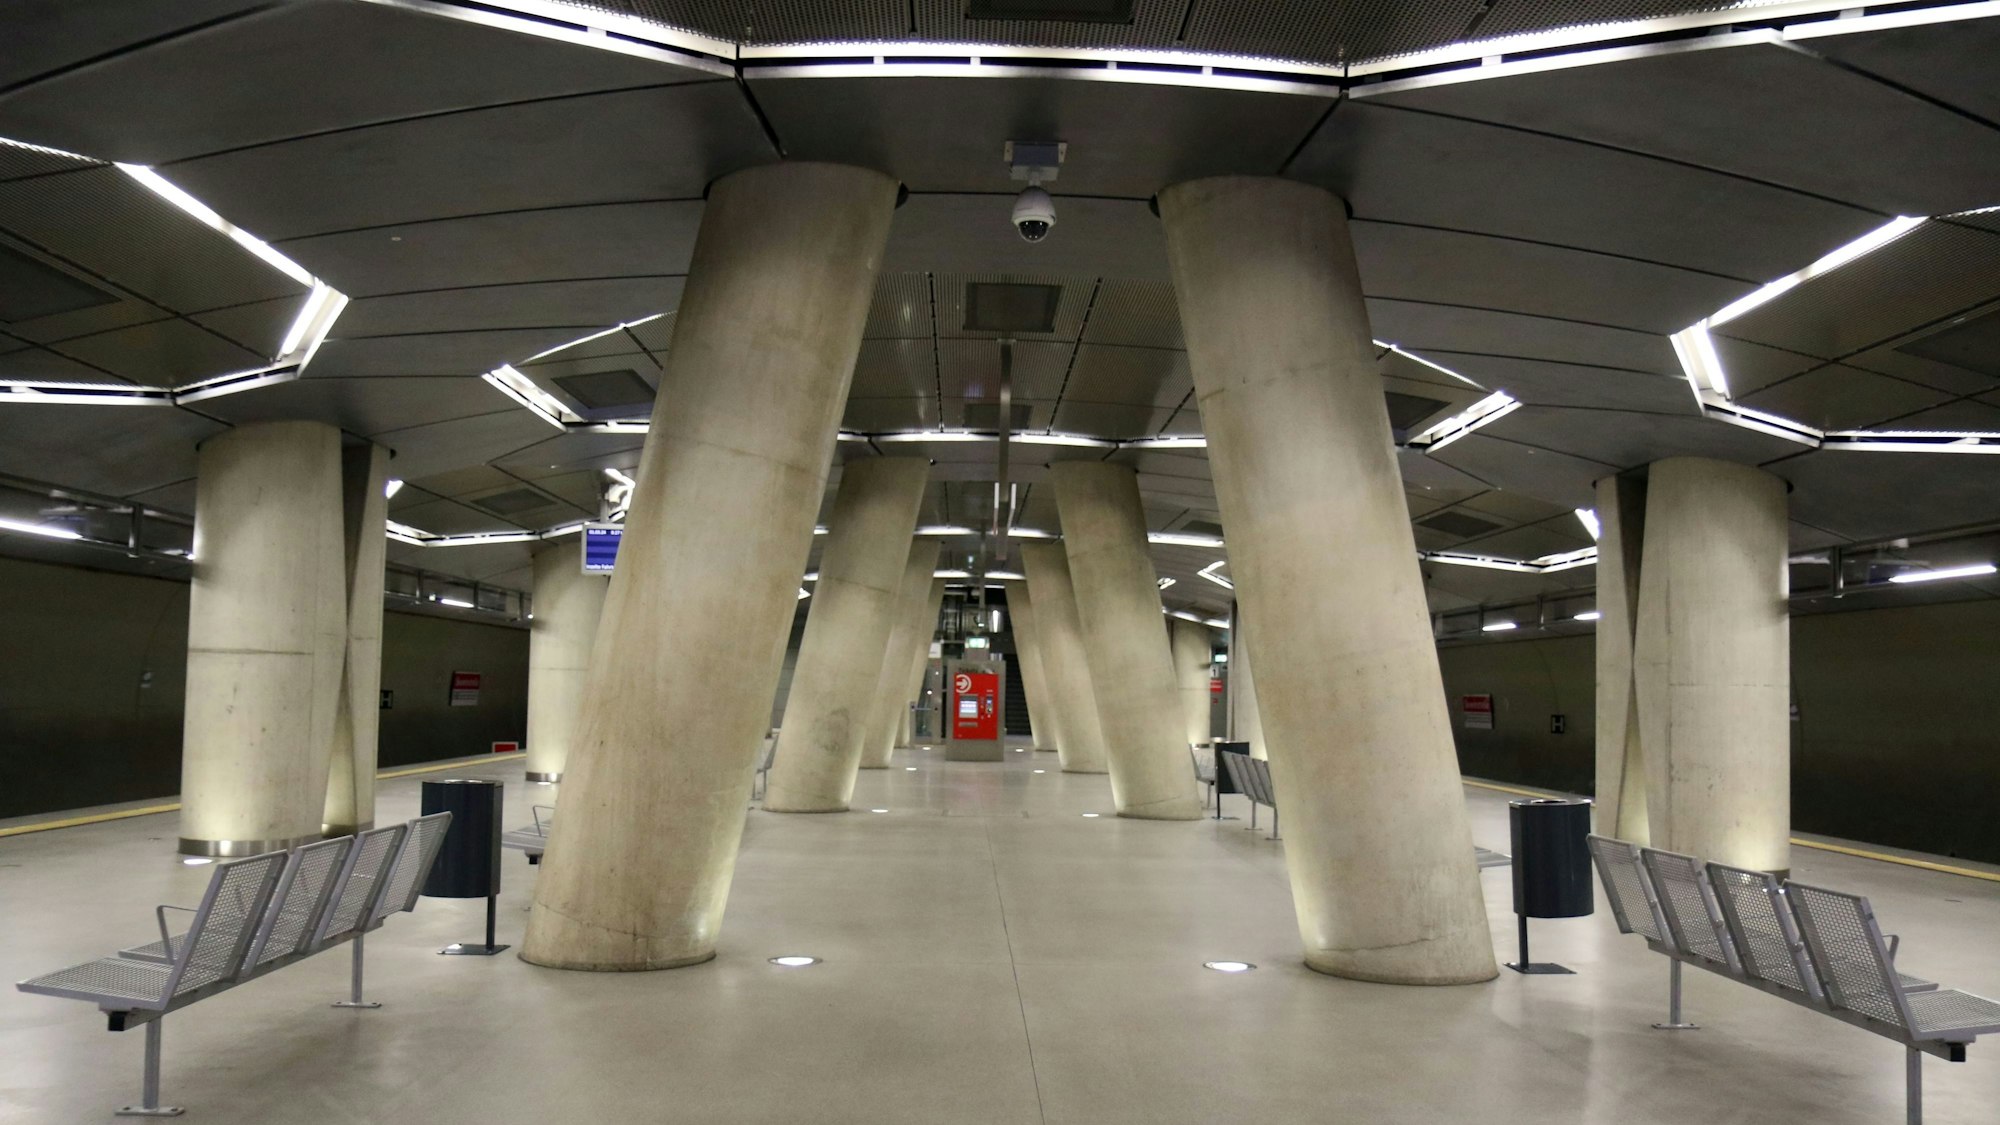 Die U-Bahn-Haltestelle Serverinstraße ist menschenleer.
